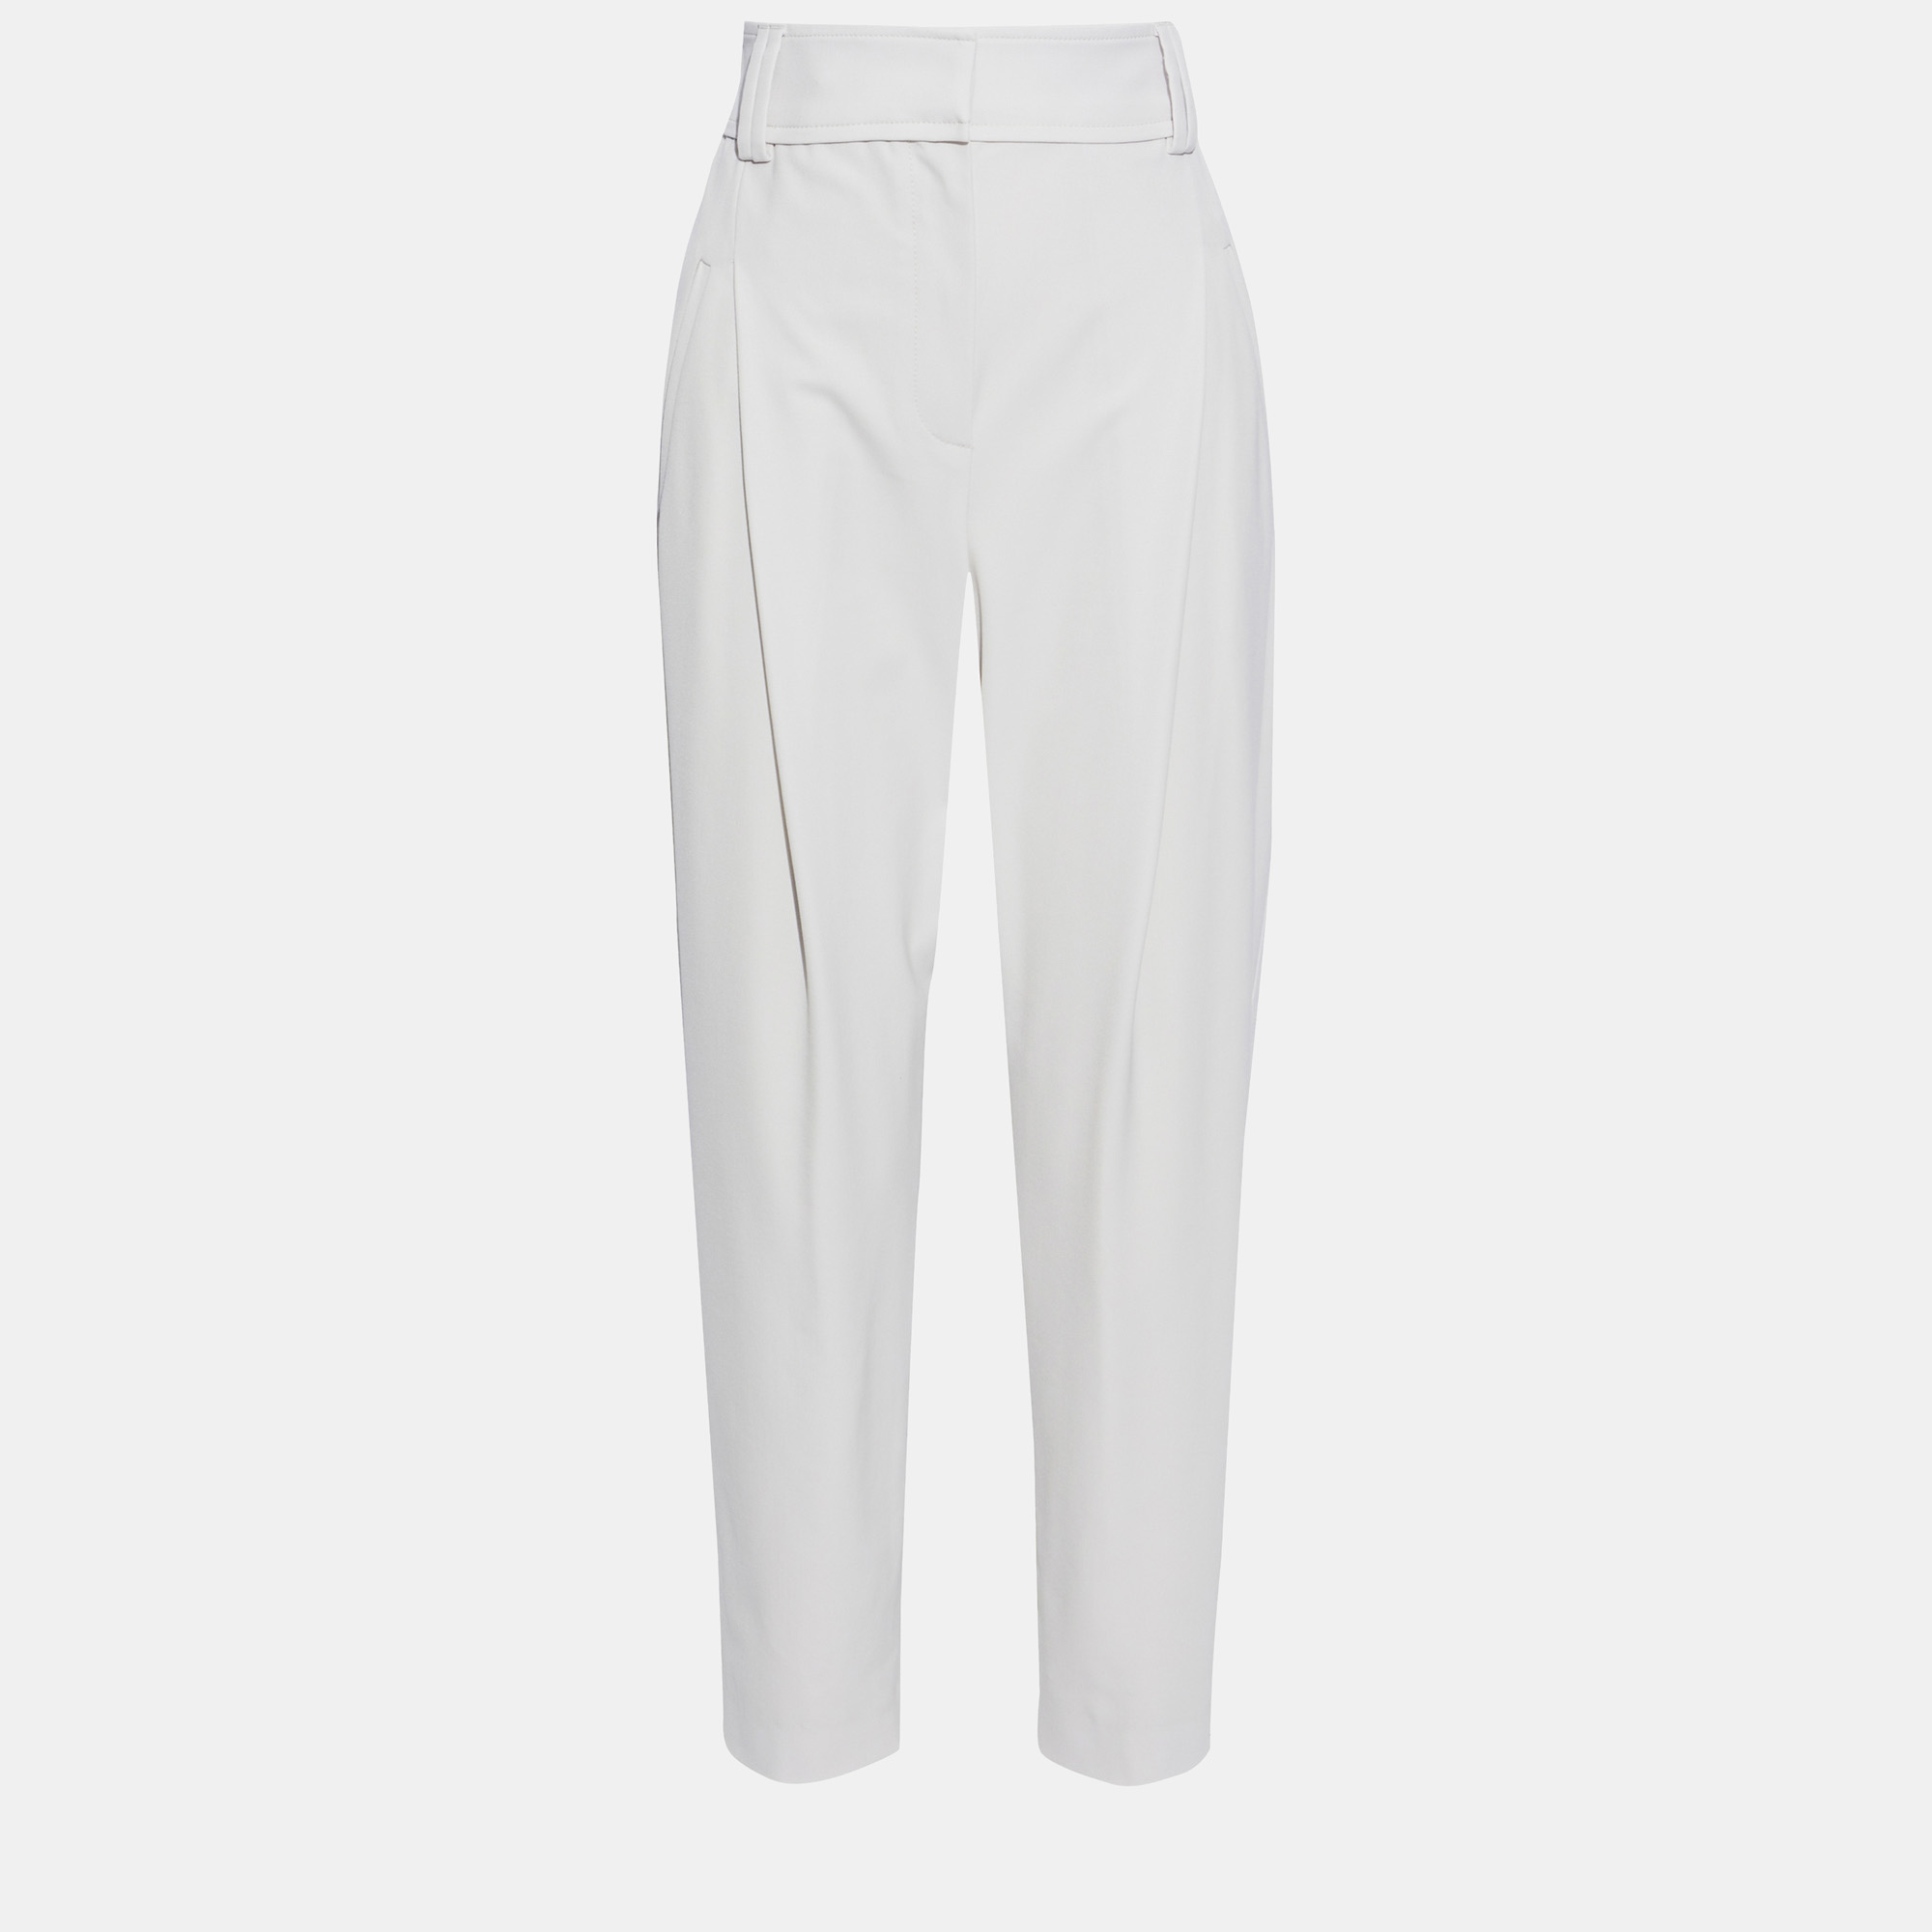 Brunello cucinelli ecru white wool-blend tapered pants xs (it 36)